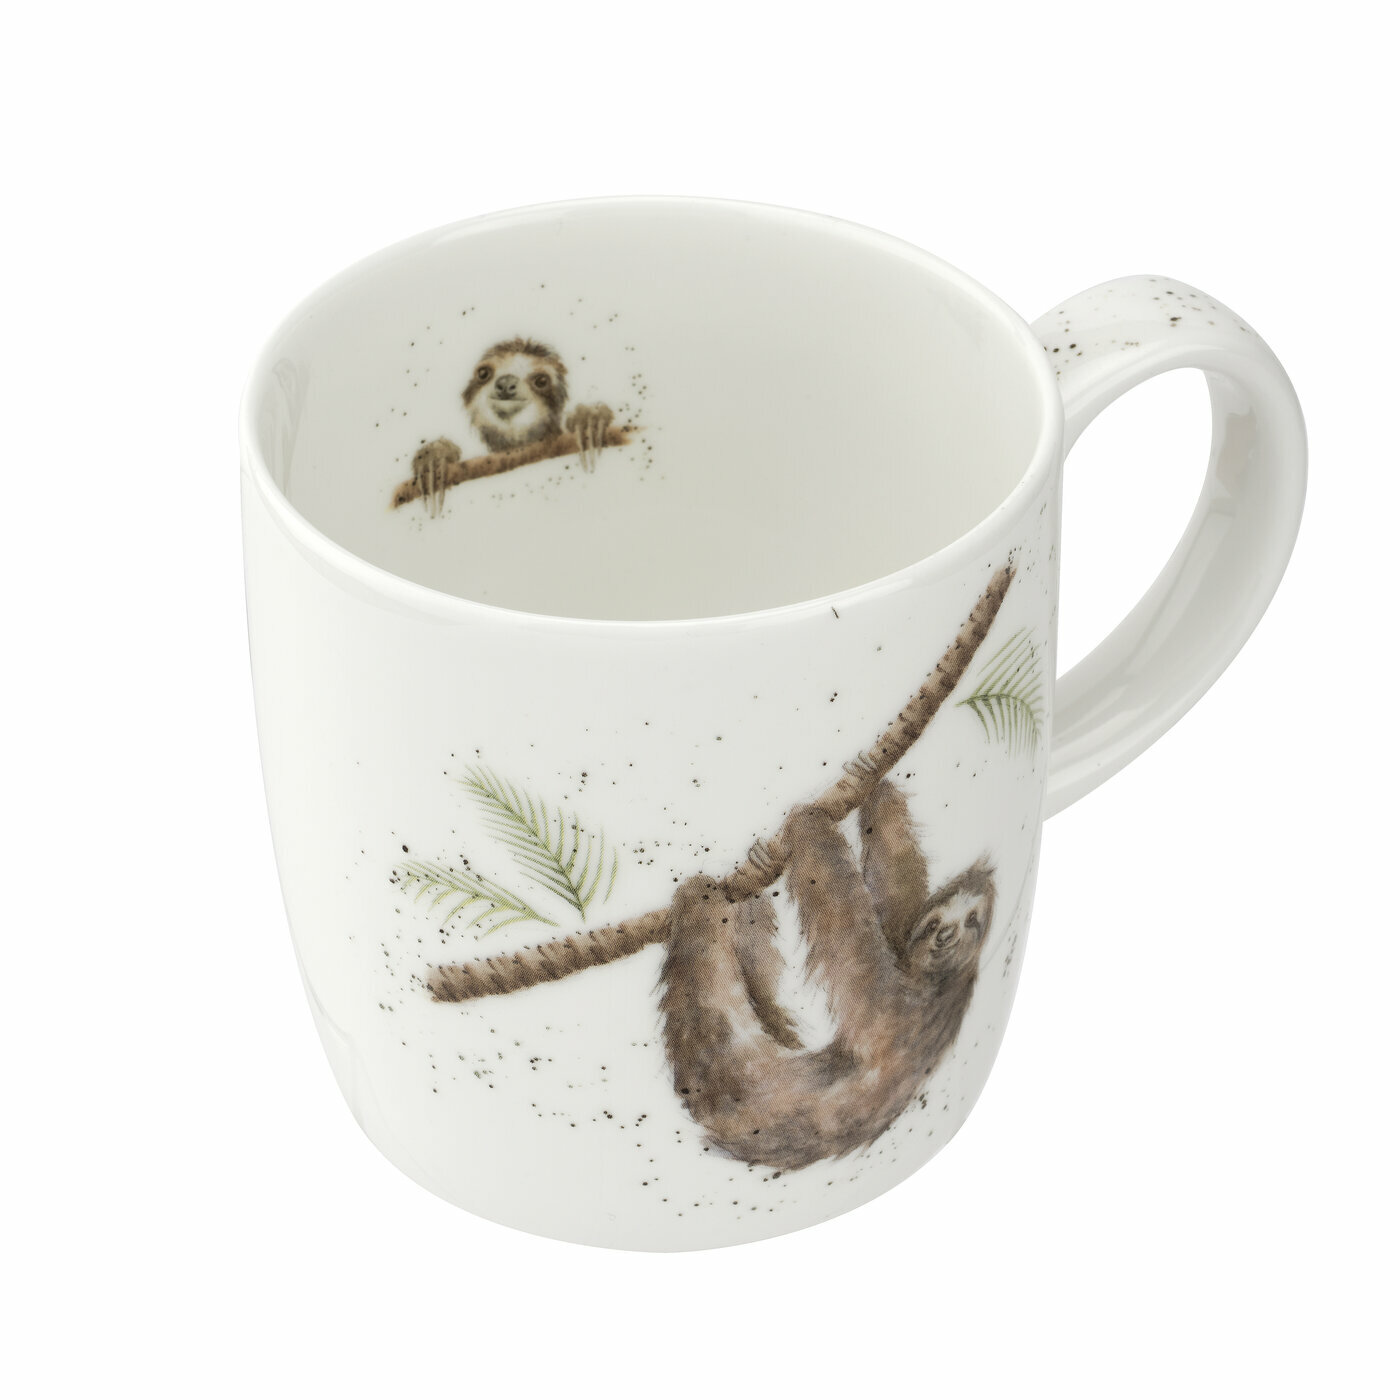 New Christmas Bone China Mug Festive Friends Sloth Gift Mugs Design Tea Coffee 